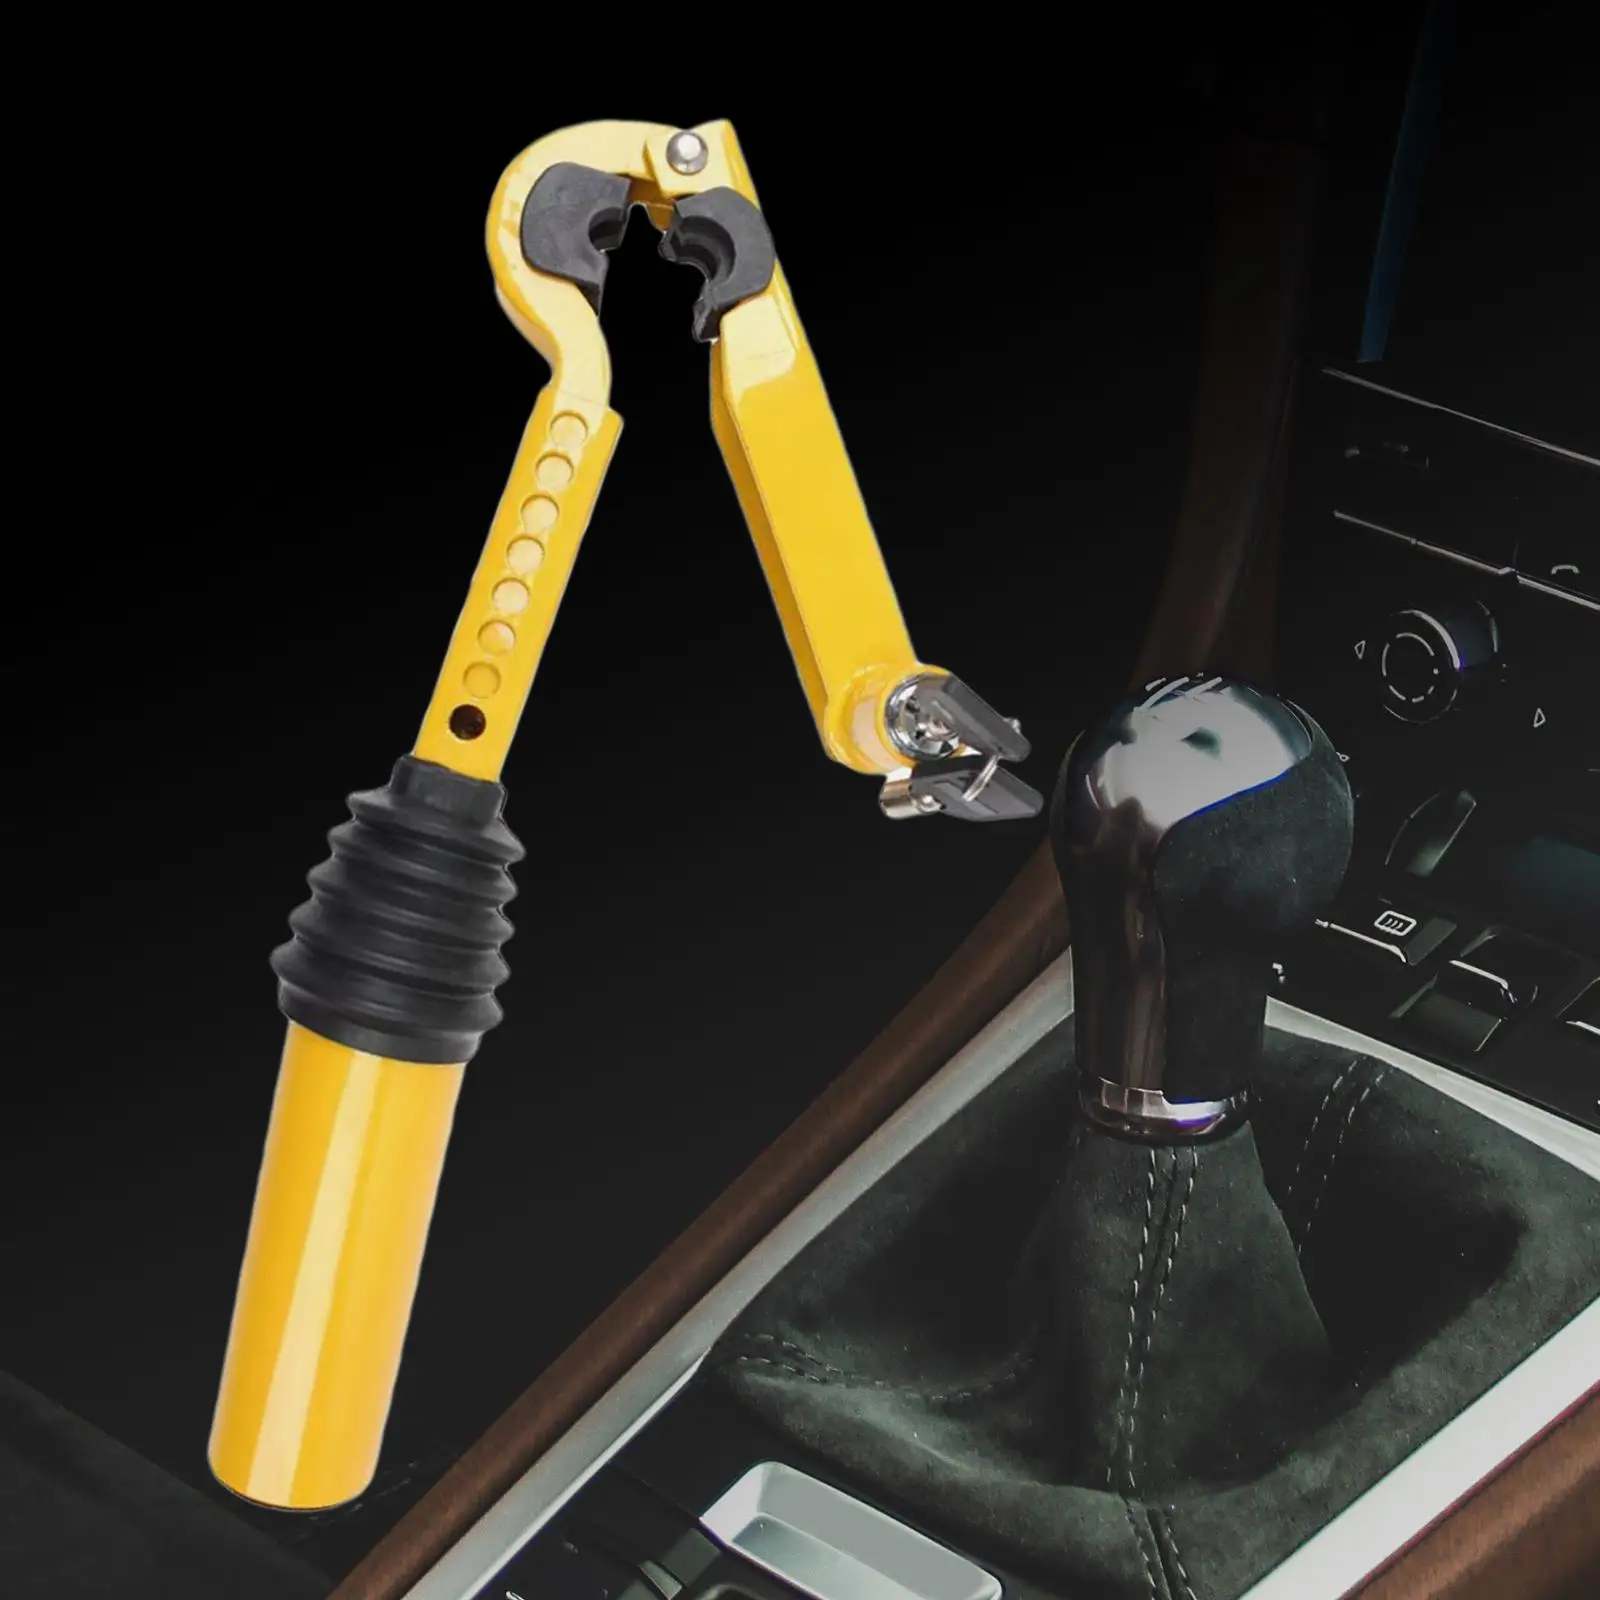 Automotive Car Handbrake  Lock Anti  Auto Accessory Strong Compact for Handbrake and Gear  for SUV Truck